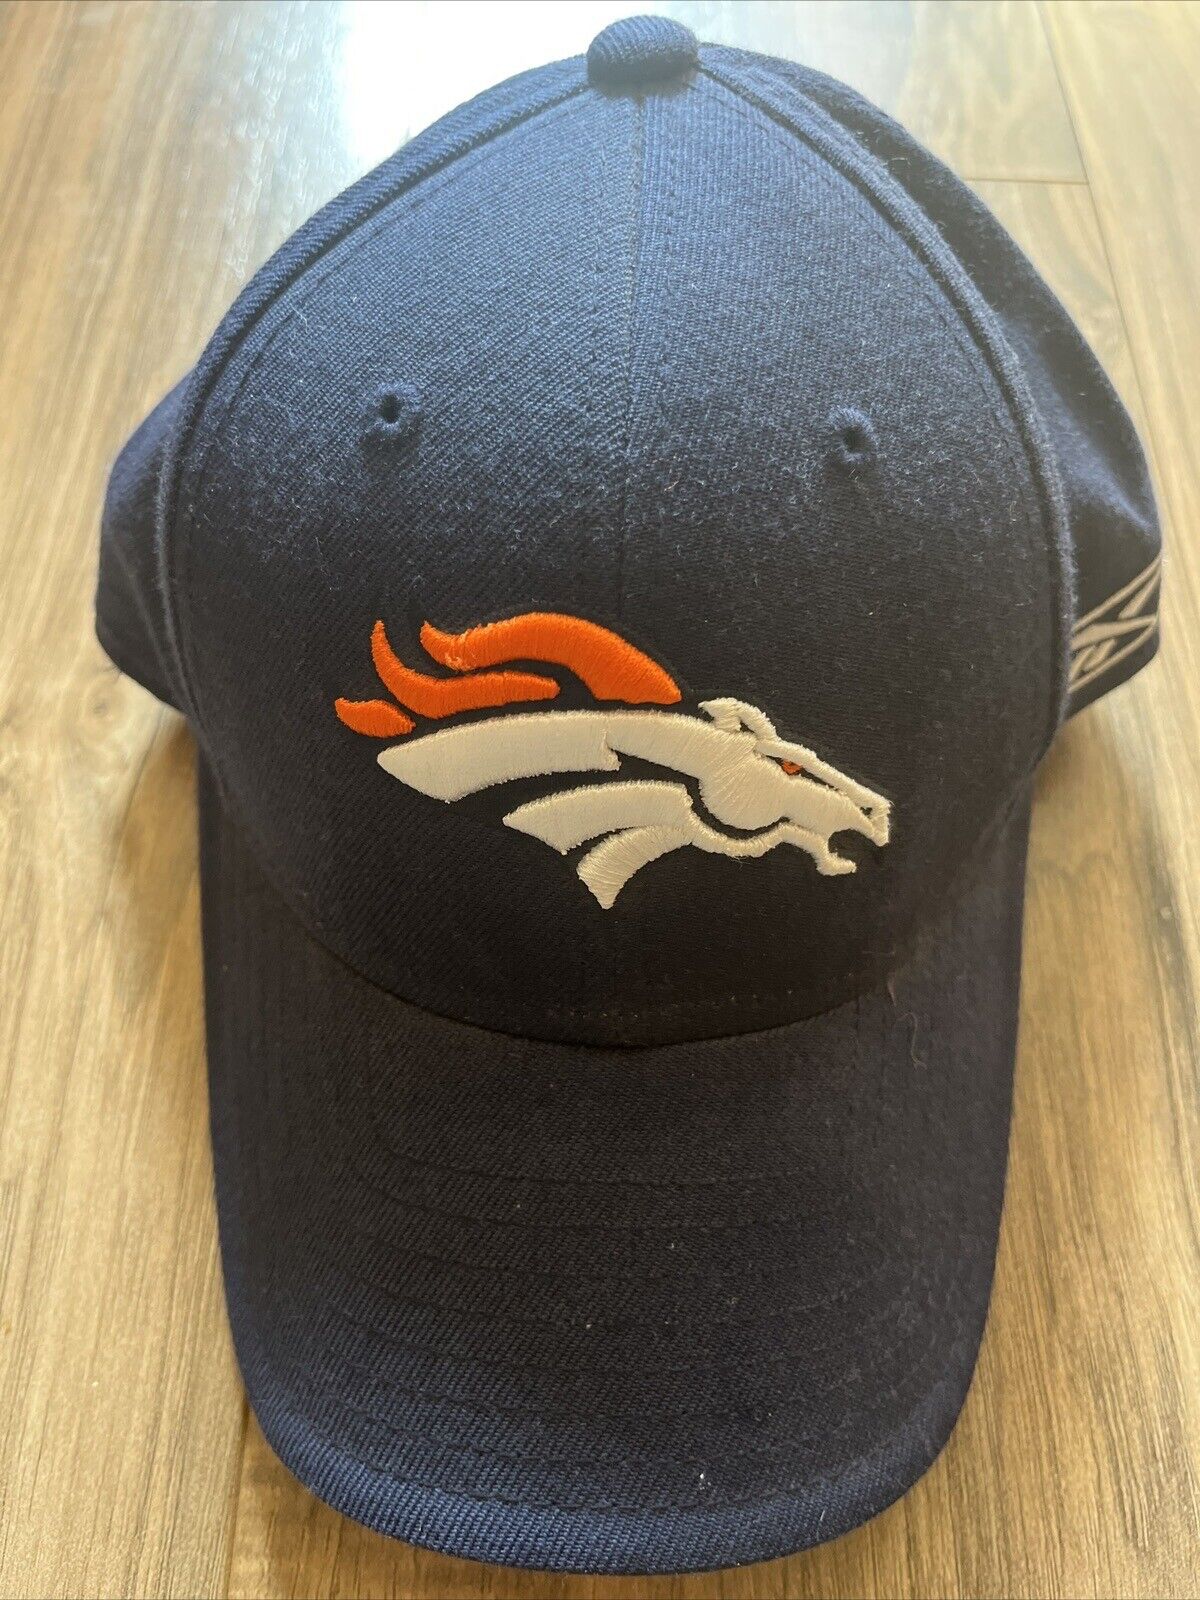 Denver Broncos NFL Team Hat Cap New Reebok Acrylic/ Wool Fitted 6 3/4